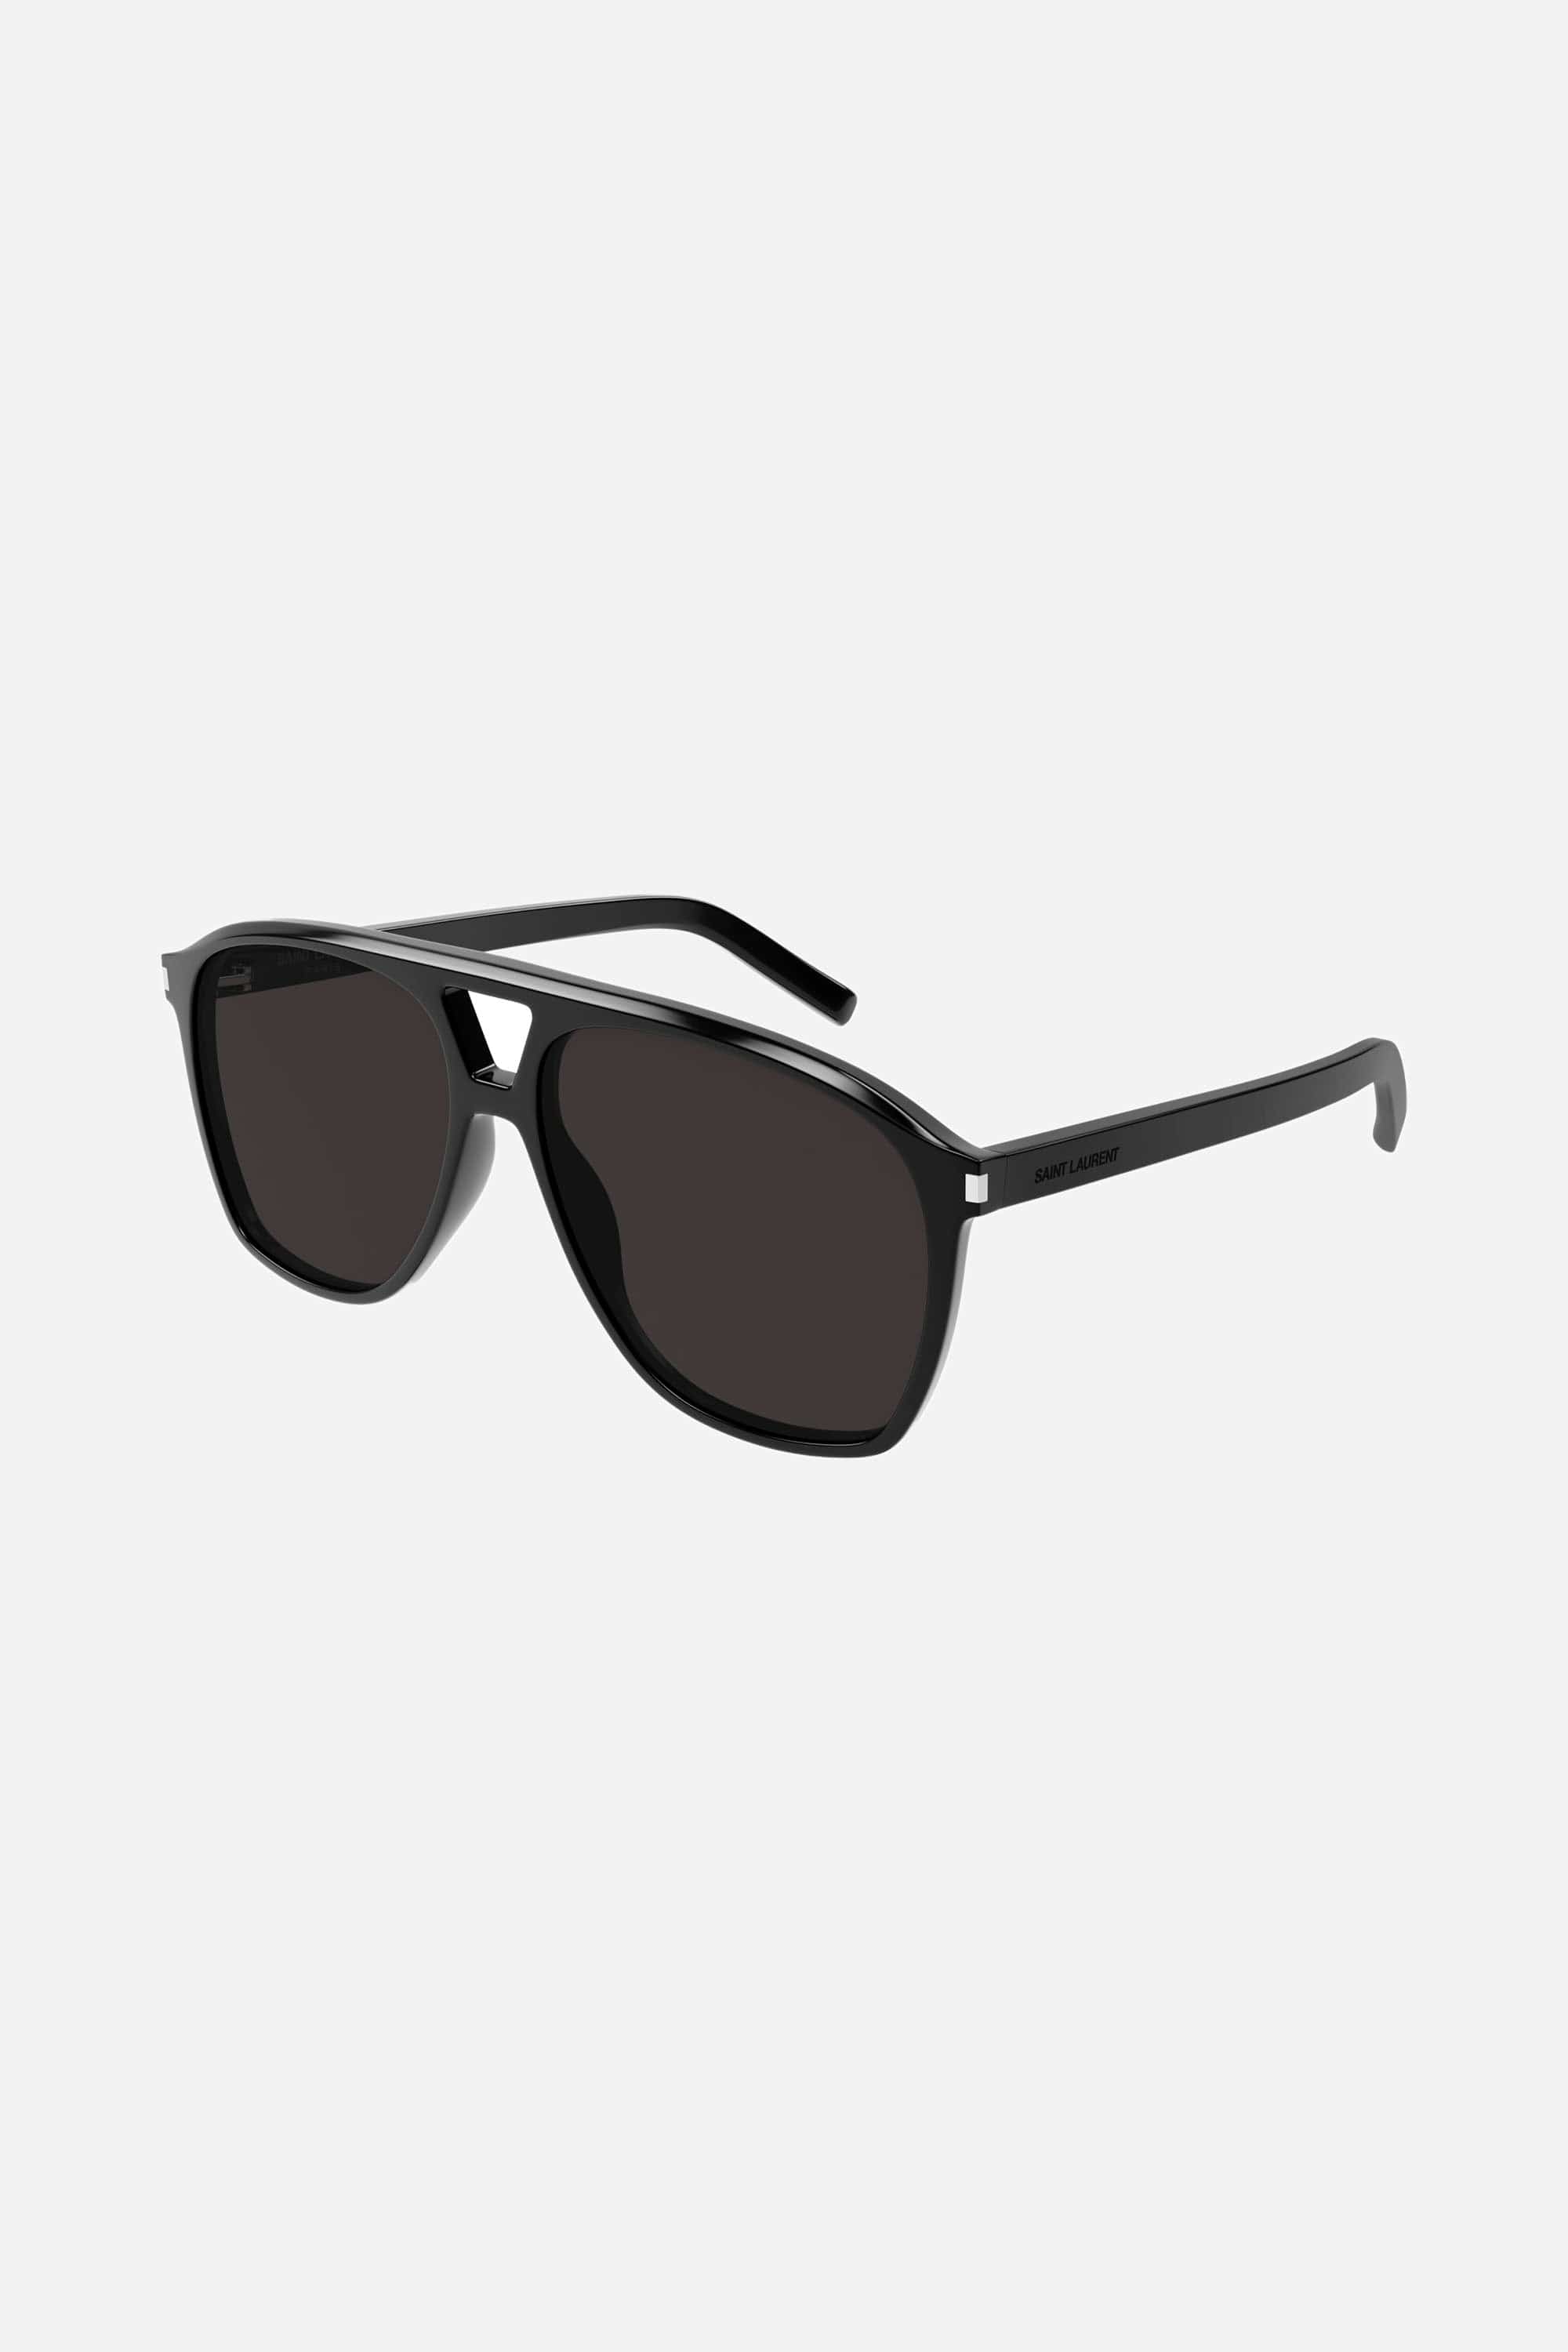 Saint Laurent pilot black sunglasses - Eyewear Club